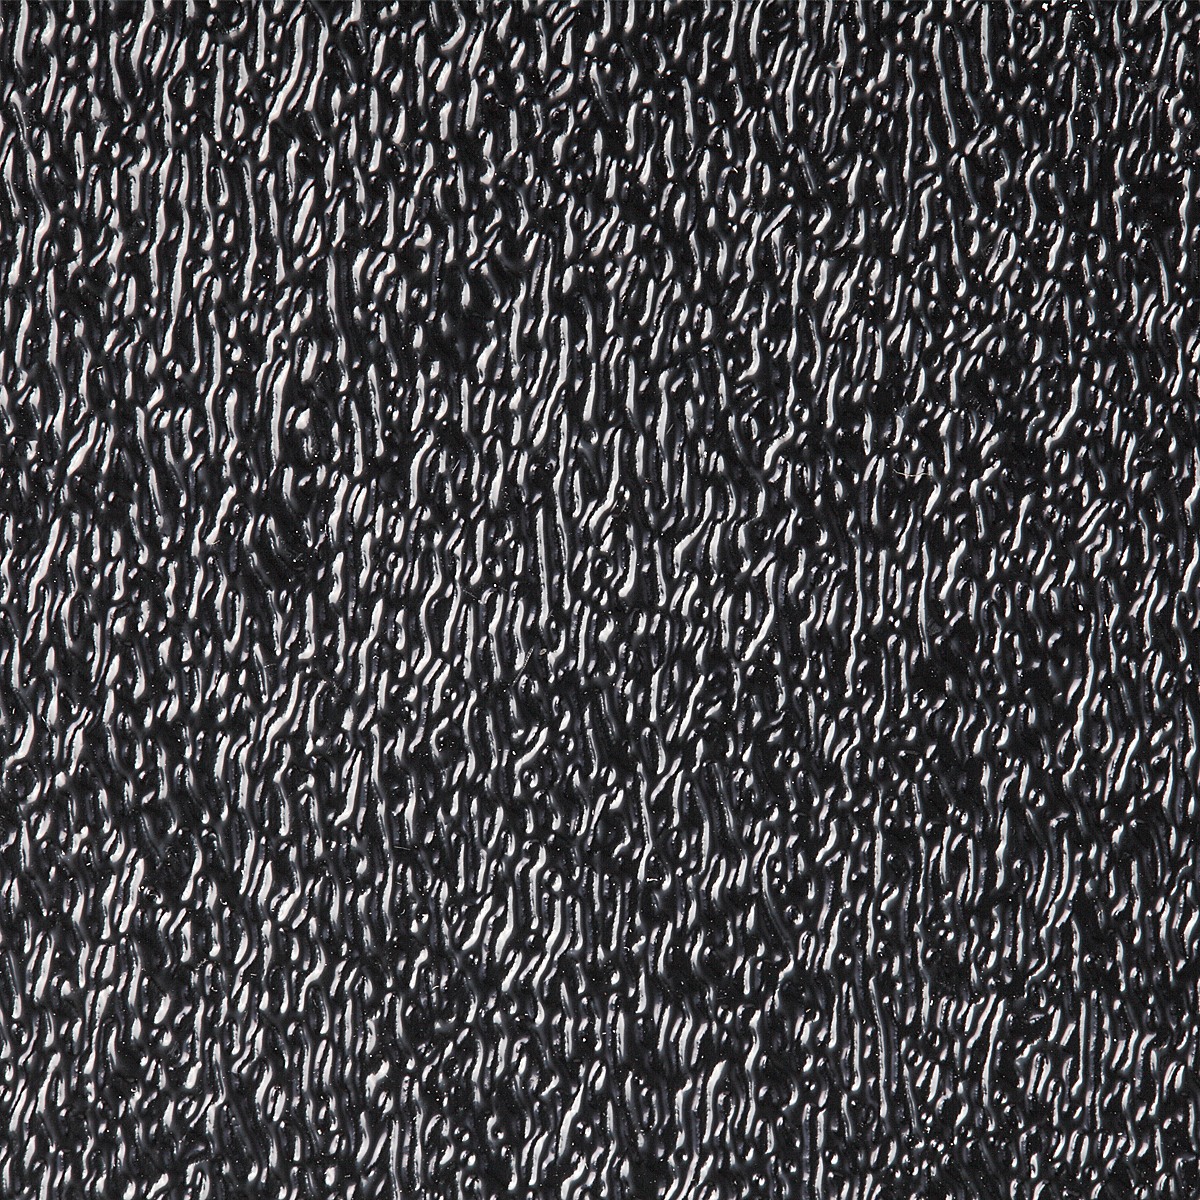 BLACK PLASTIC ABS SHEET 3/32. 1 SHEET USED FOR CUSTOMER WORK ON PANELS CAR DASH eBay